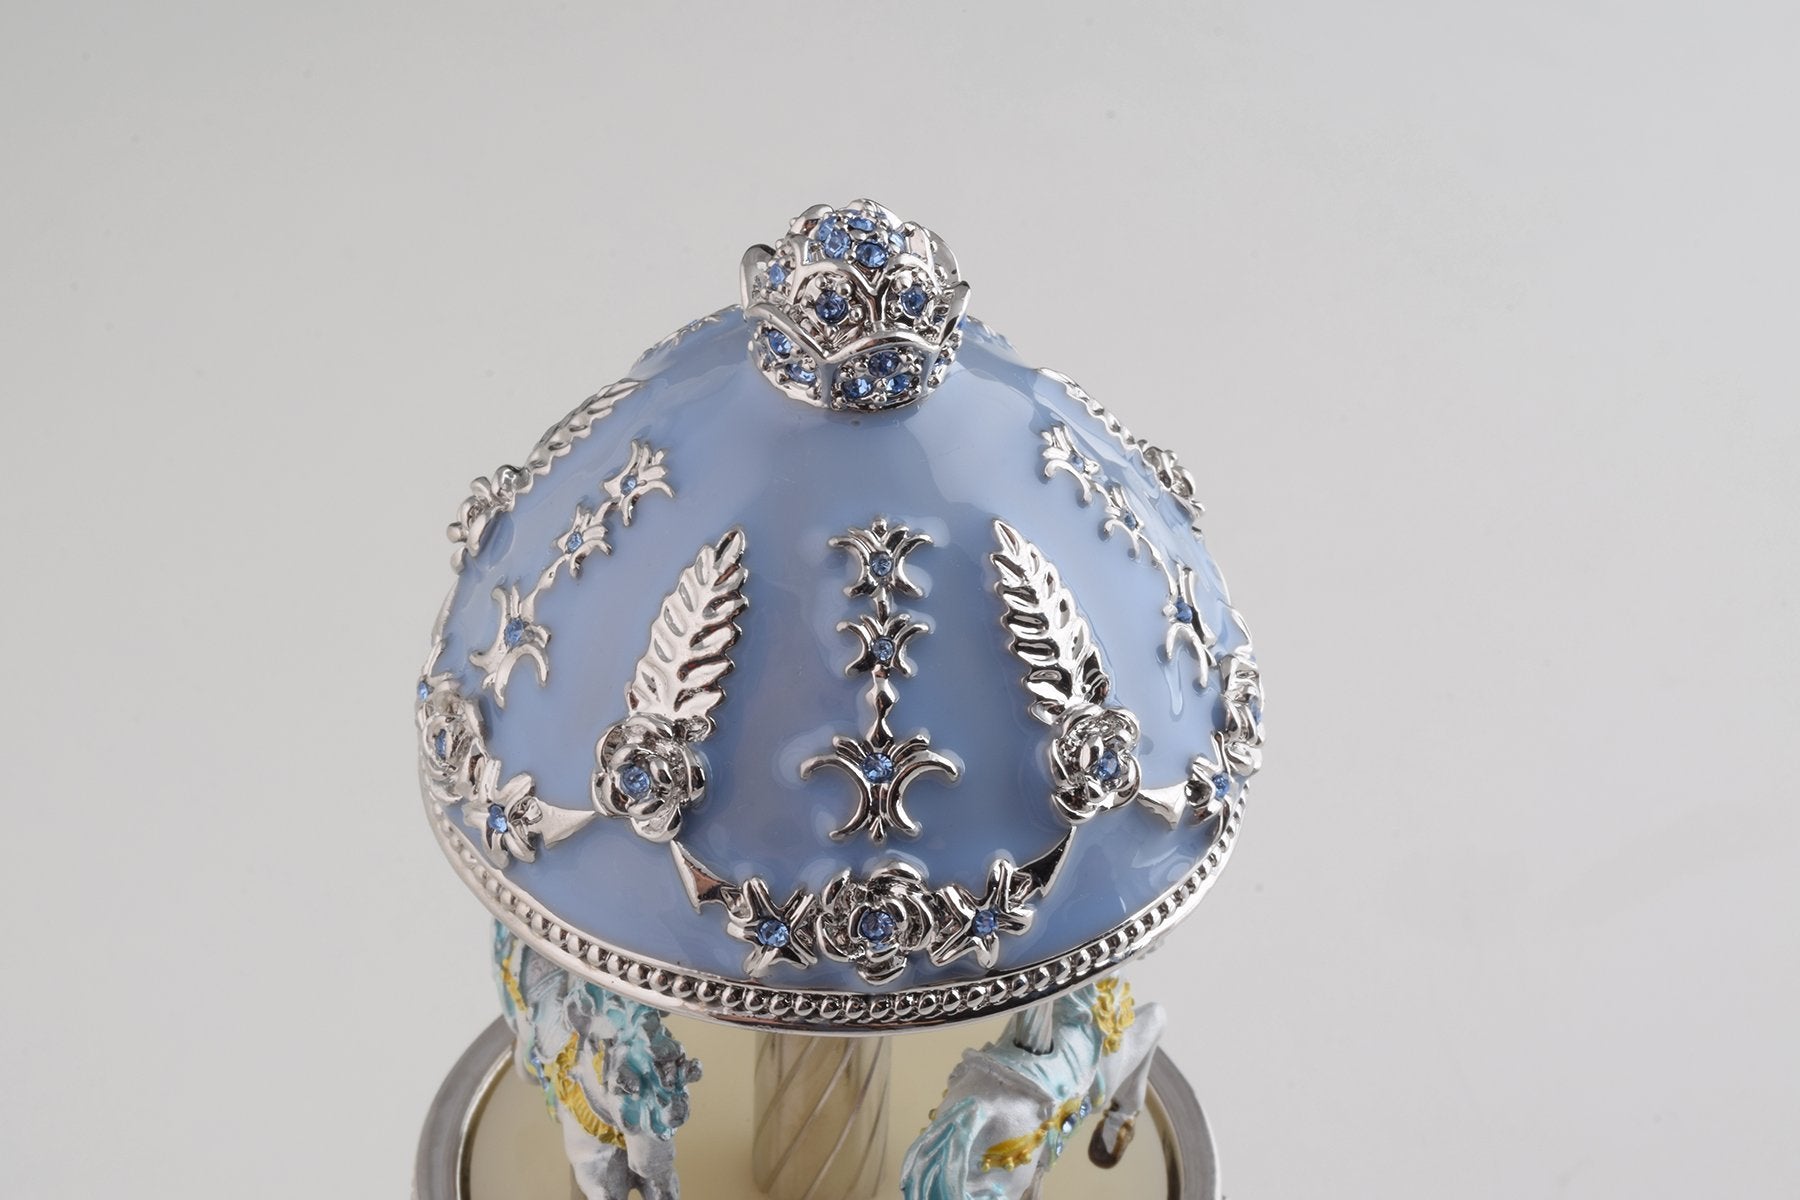 Keren Kopal Light Blue Musical Carousel Faberge Egg  124.00